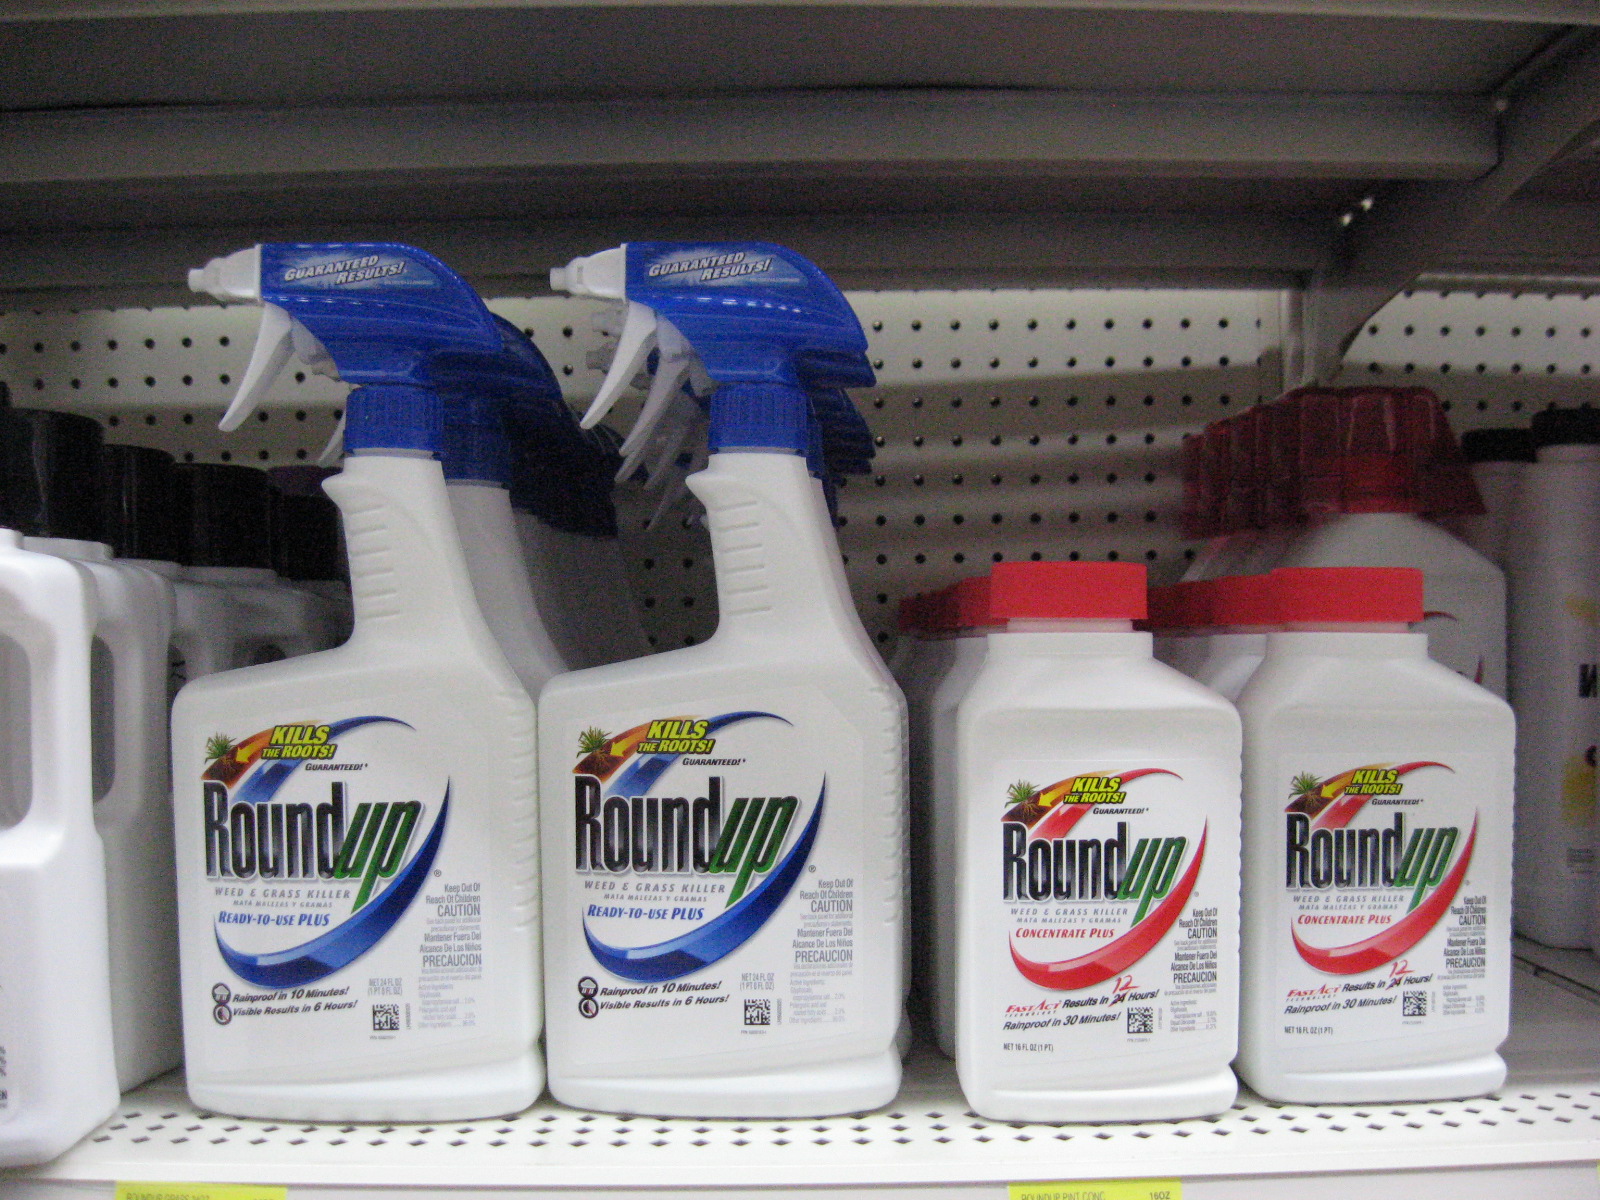 Roundup spray bottles on shelf